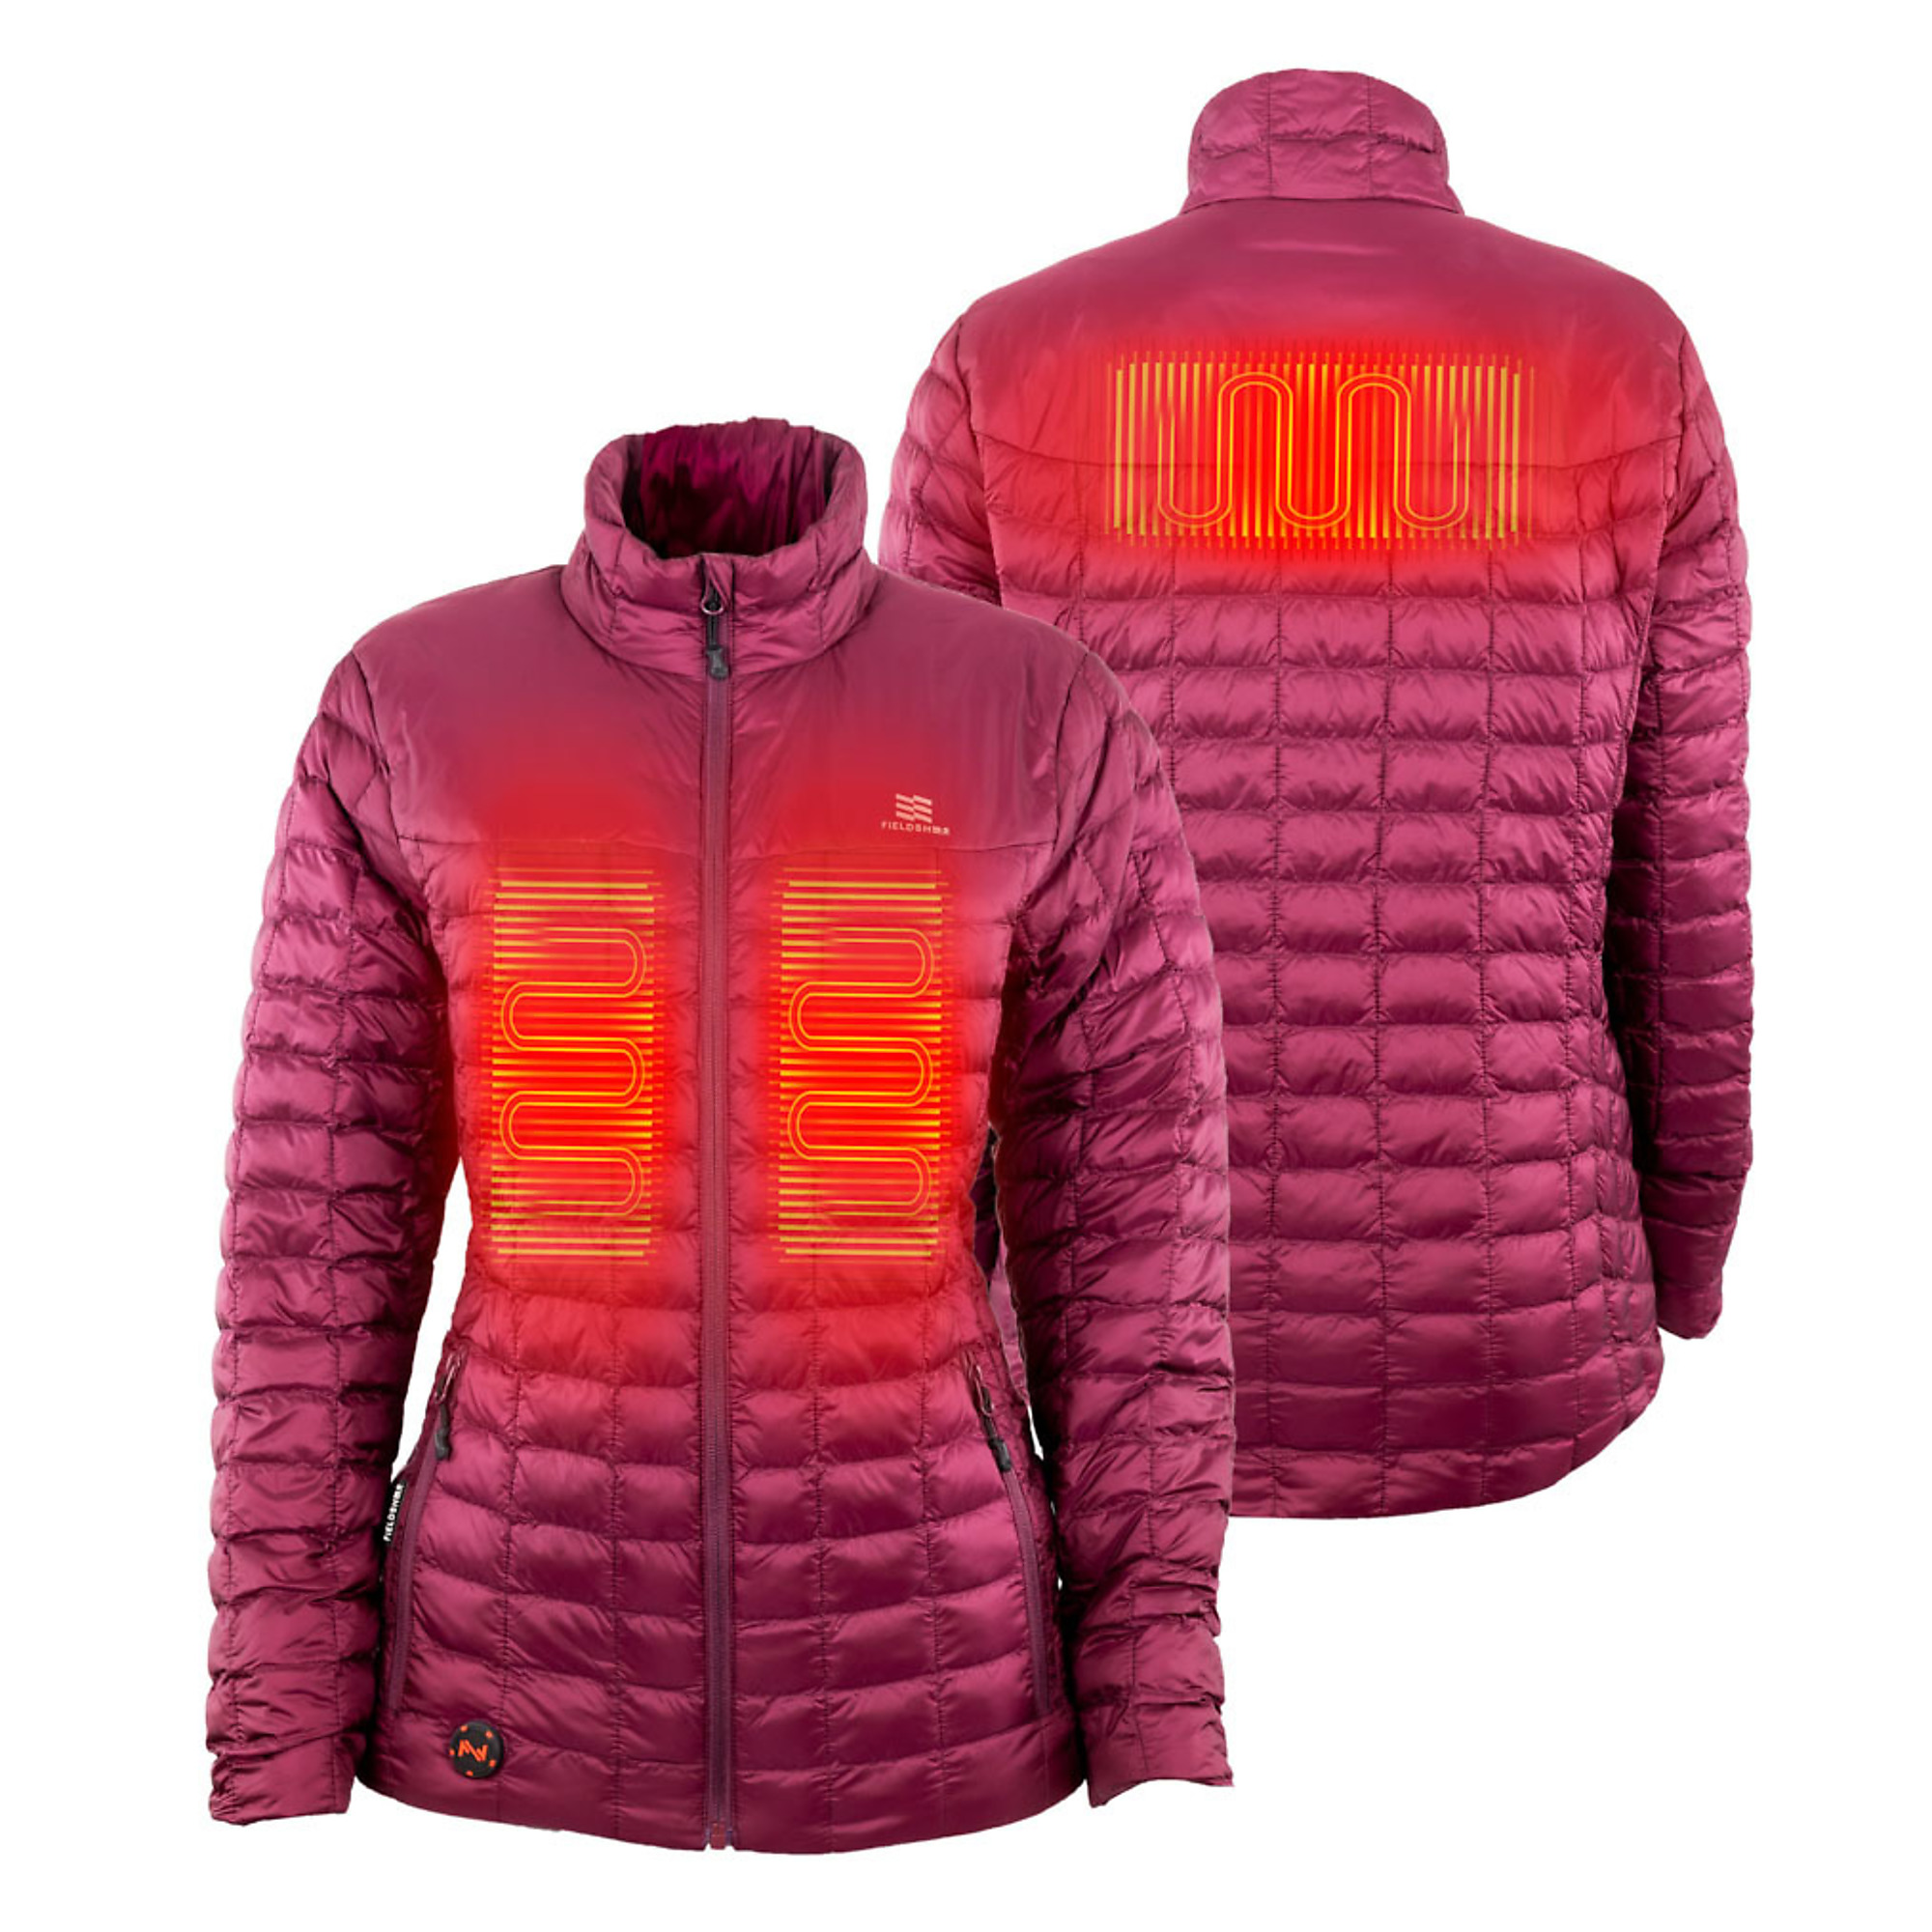 Fieldsheer, Women's 7.4v Backcountry Heated Jacket, Size S, Color Red, Model MWWJ04310220